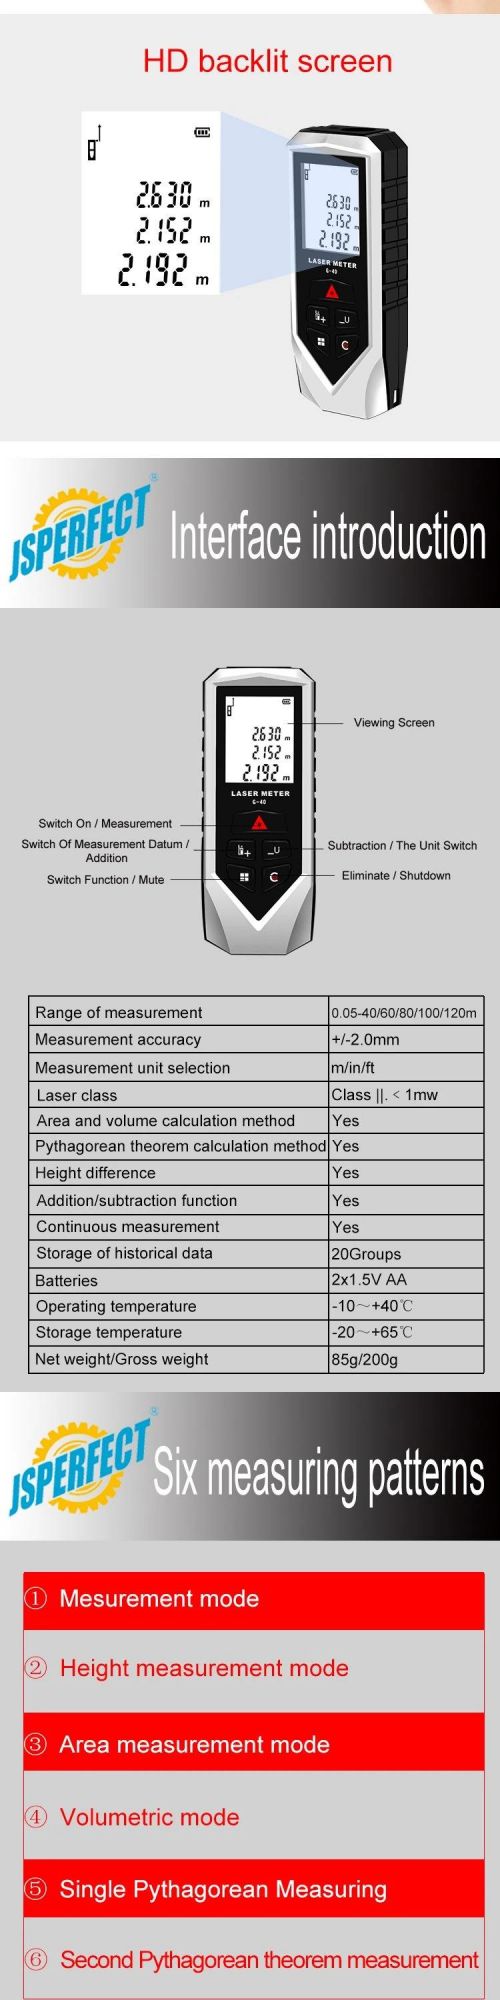 Green Precision Good Price Laser Distance Meter Measure